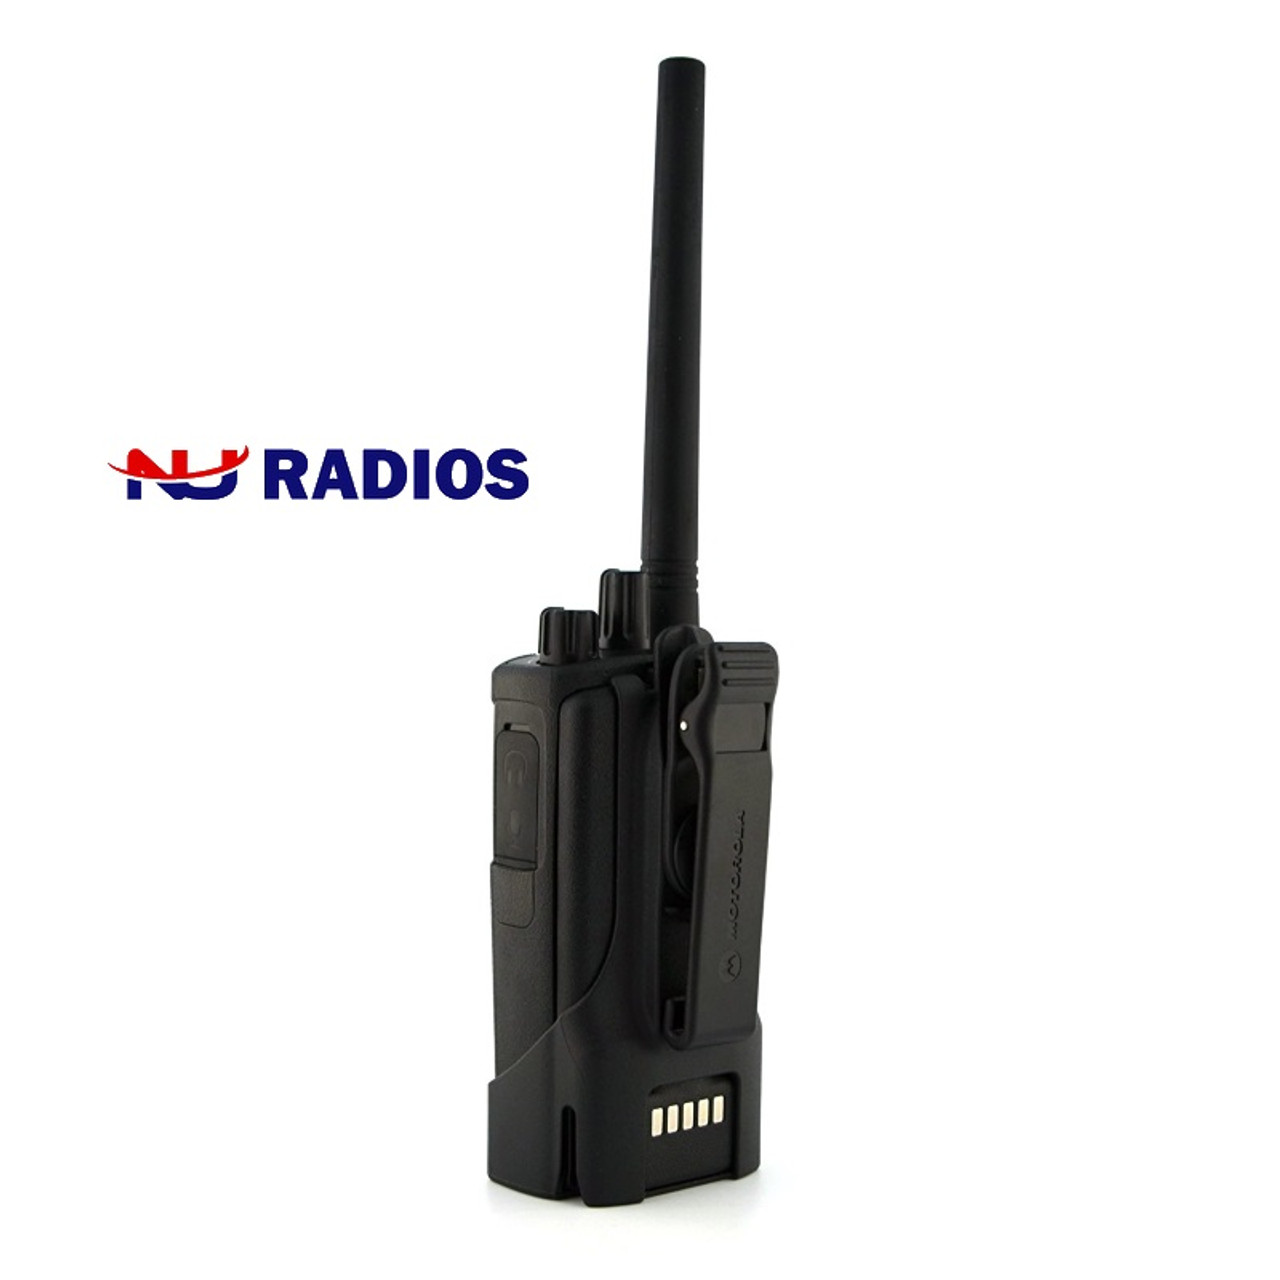 Motorola RMM2050 Watt MURS Business 2-Way VHF Radio requires No FCC  license and works great outdoors.